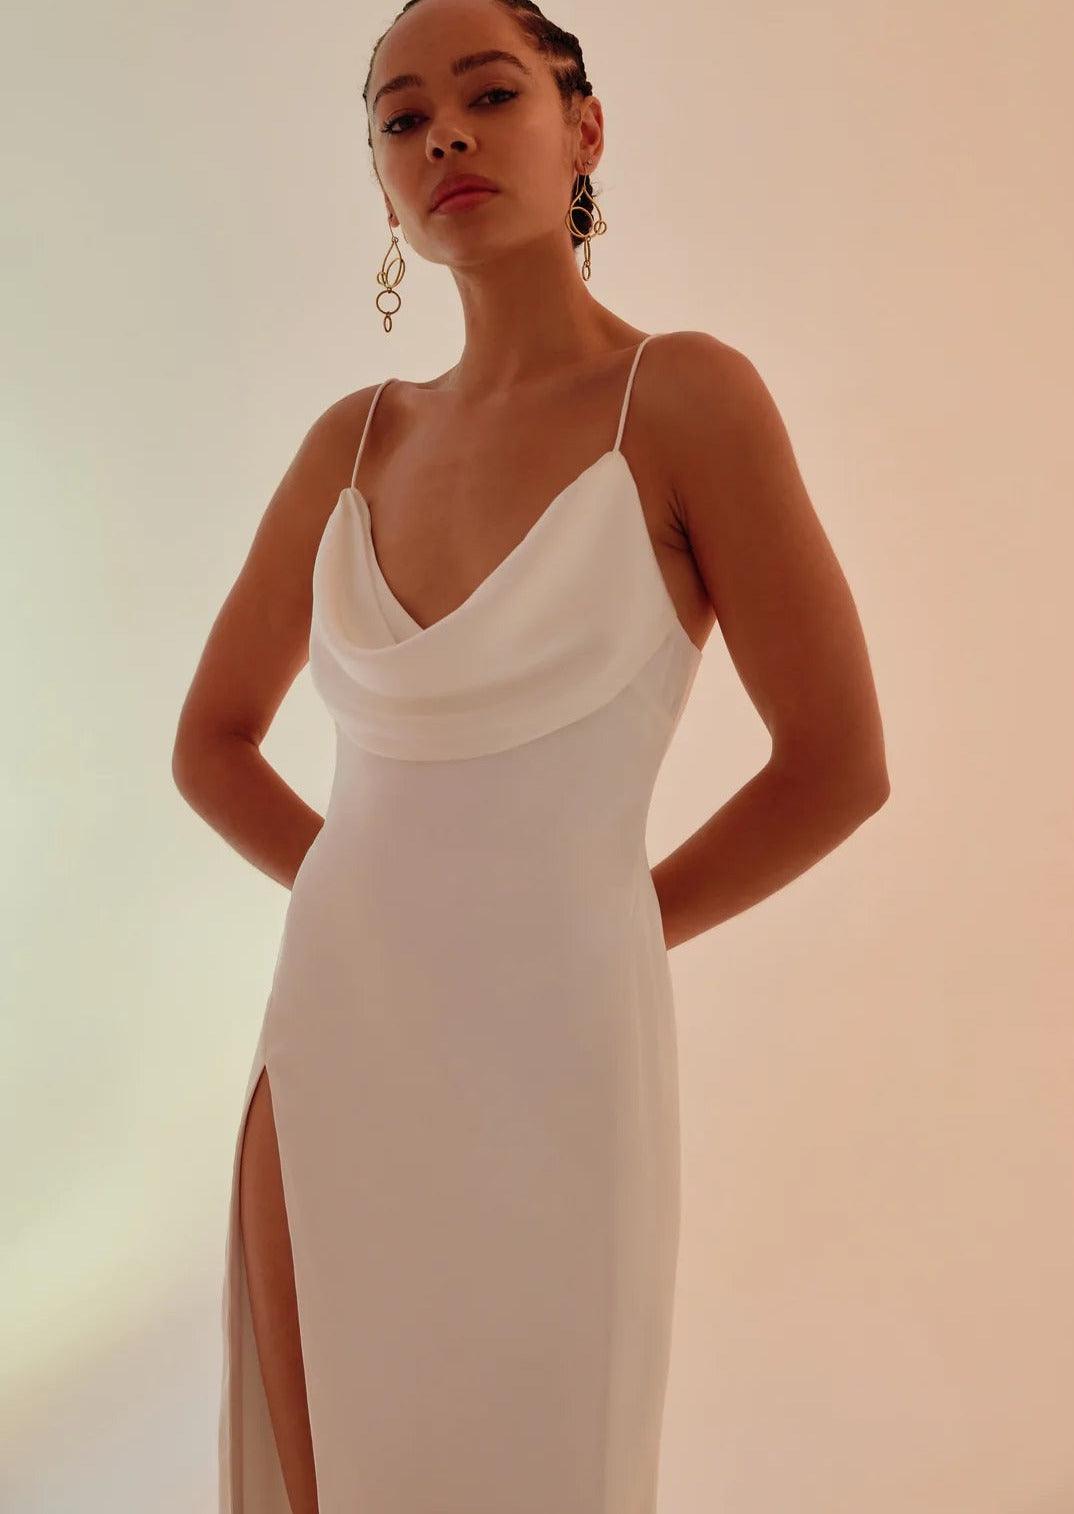 Lexi - Mila Dress in White - OutDazl